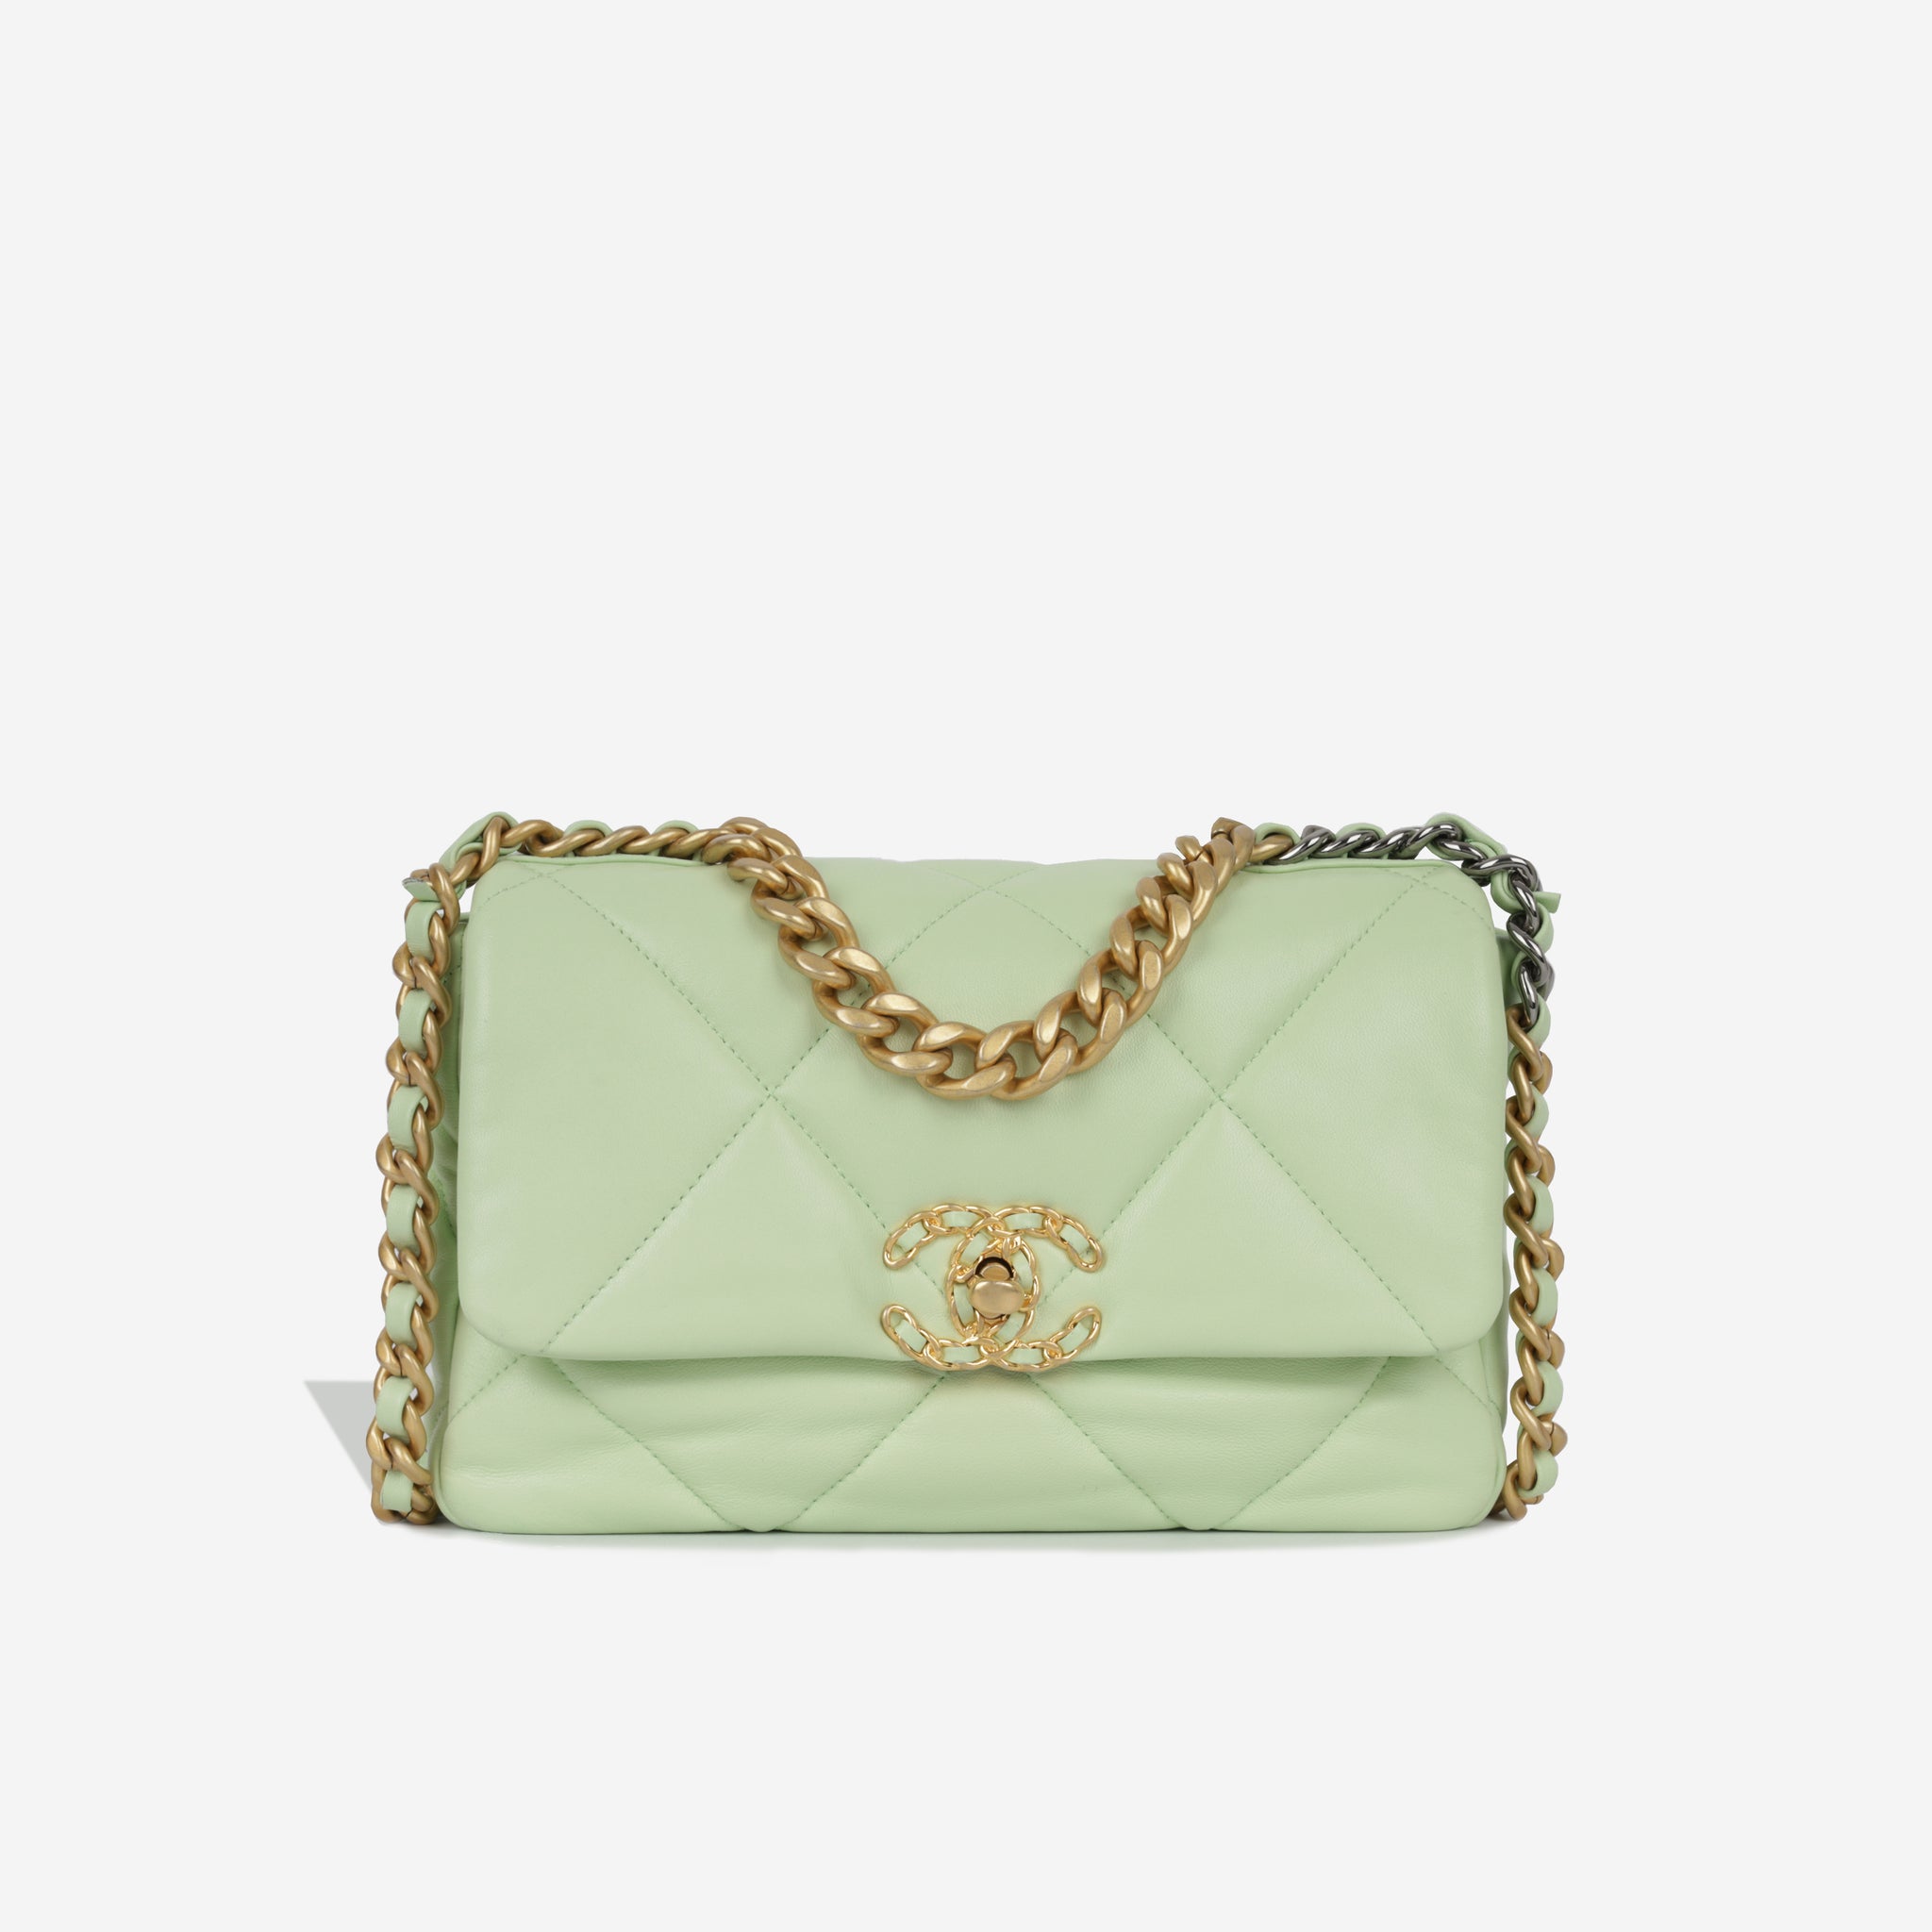 Chanel - Chanel 19 Flap Bag - Small - Mint Green Lambskin - MHW